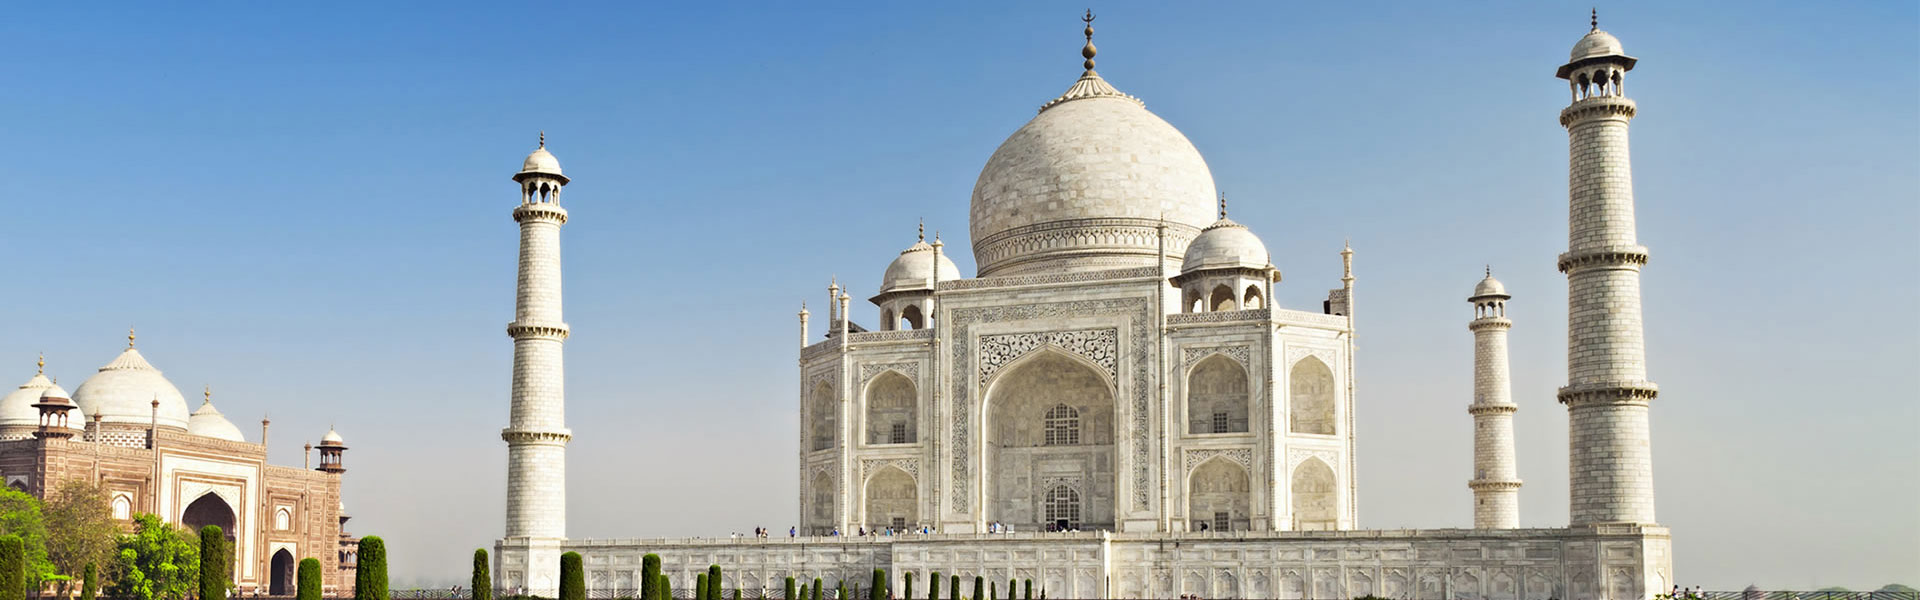 North-India-with-Taj-Mahal-Tour